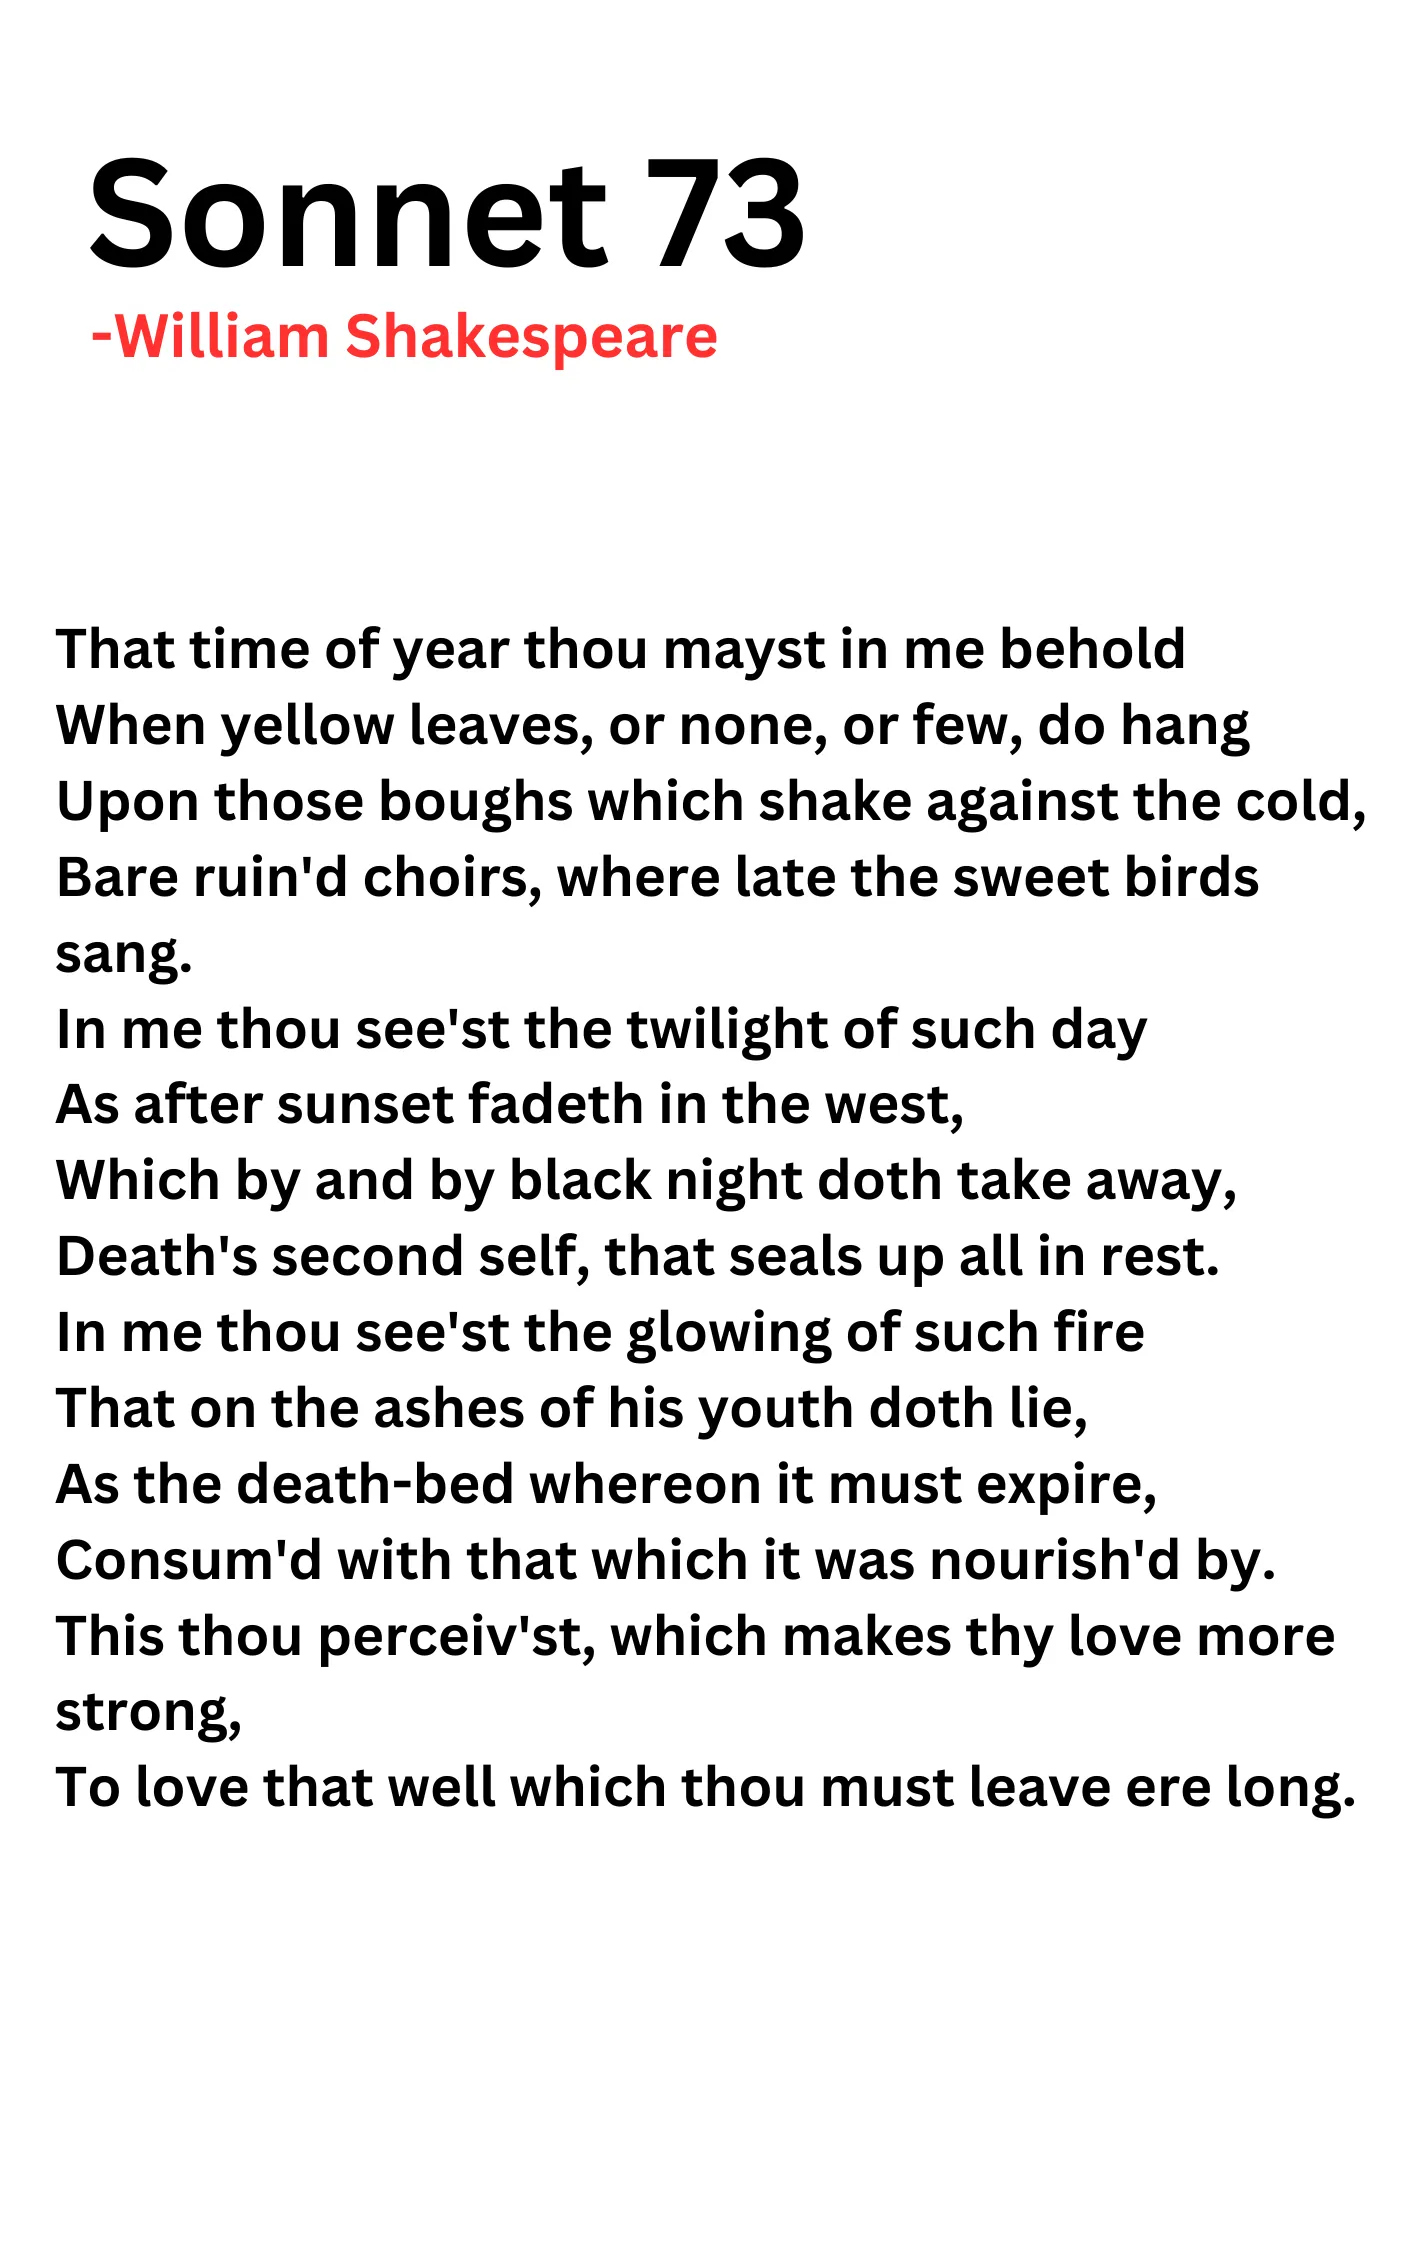 Sonnet 73 by William Shakespeare- Summary & Analysis